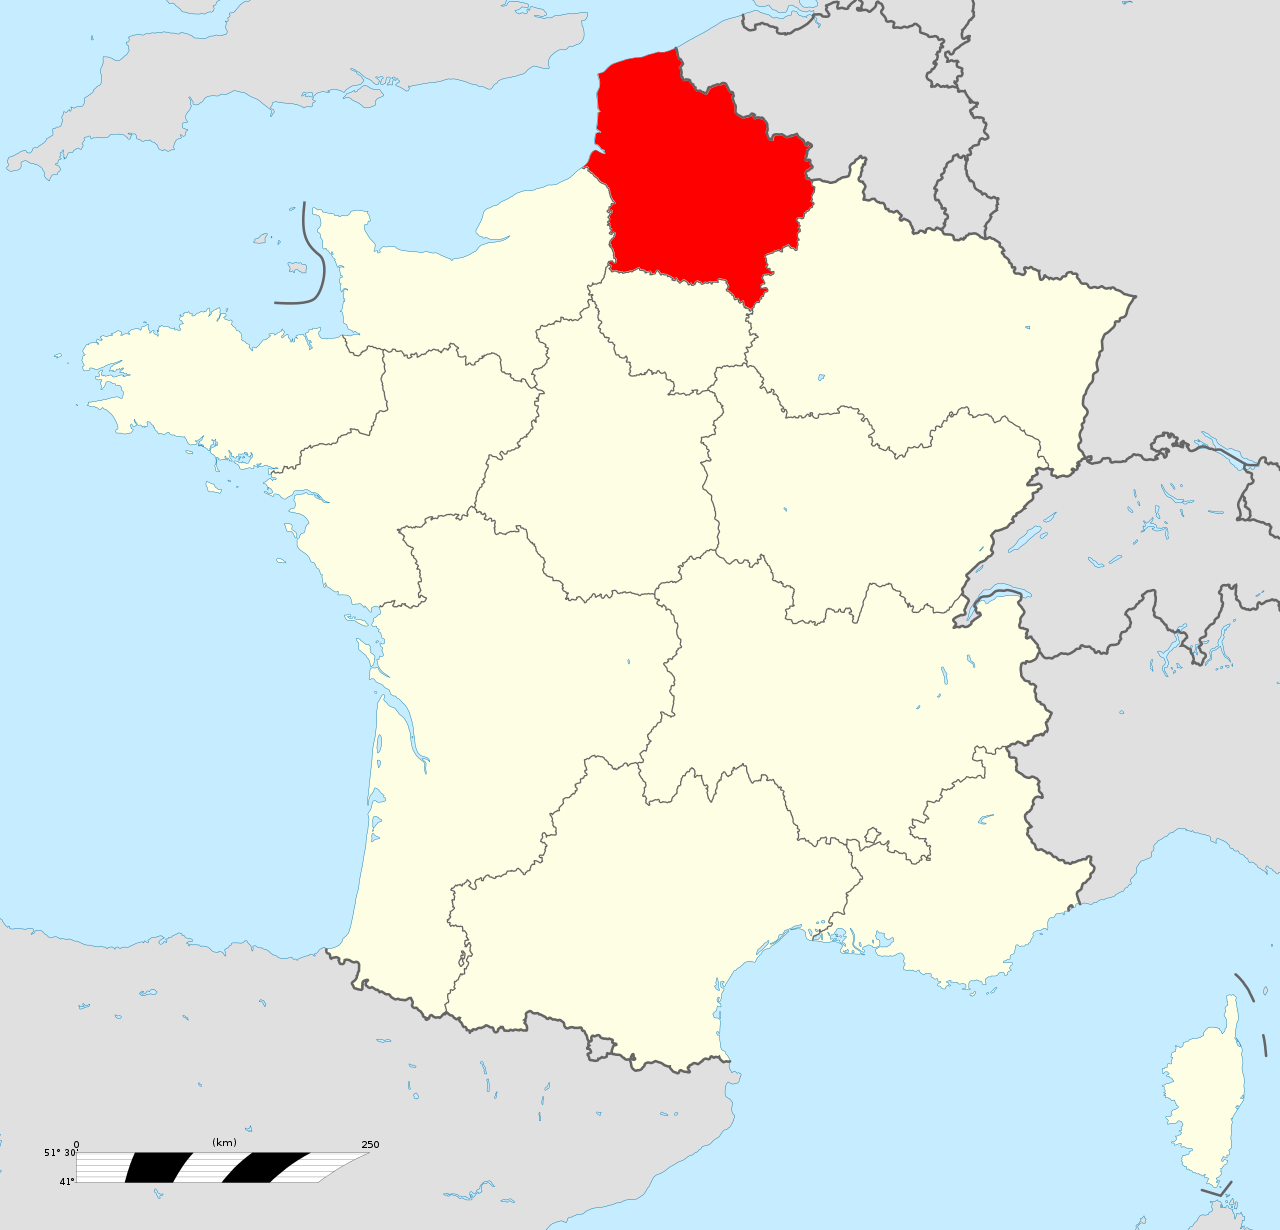 Biez House Urbex location or around the region Hauts-de-France (Nauw van Calais), France